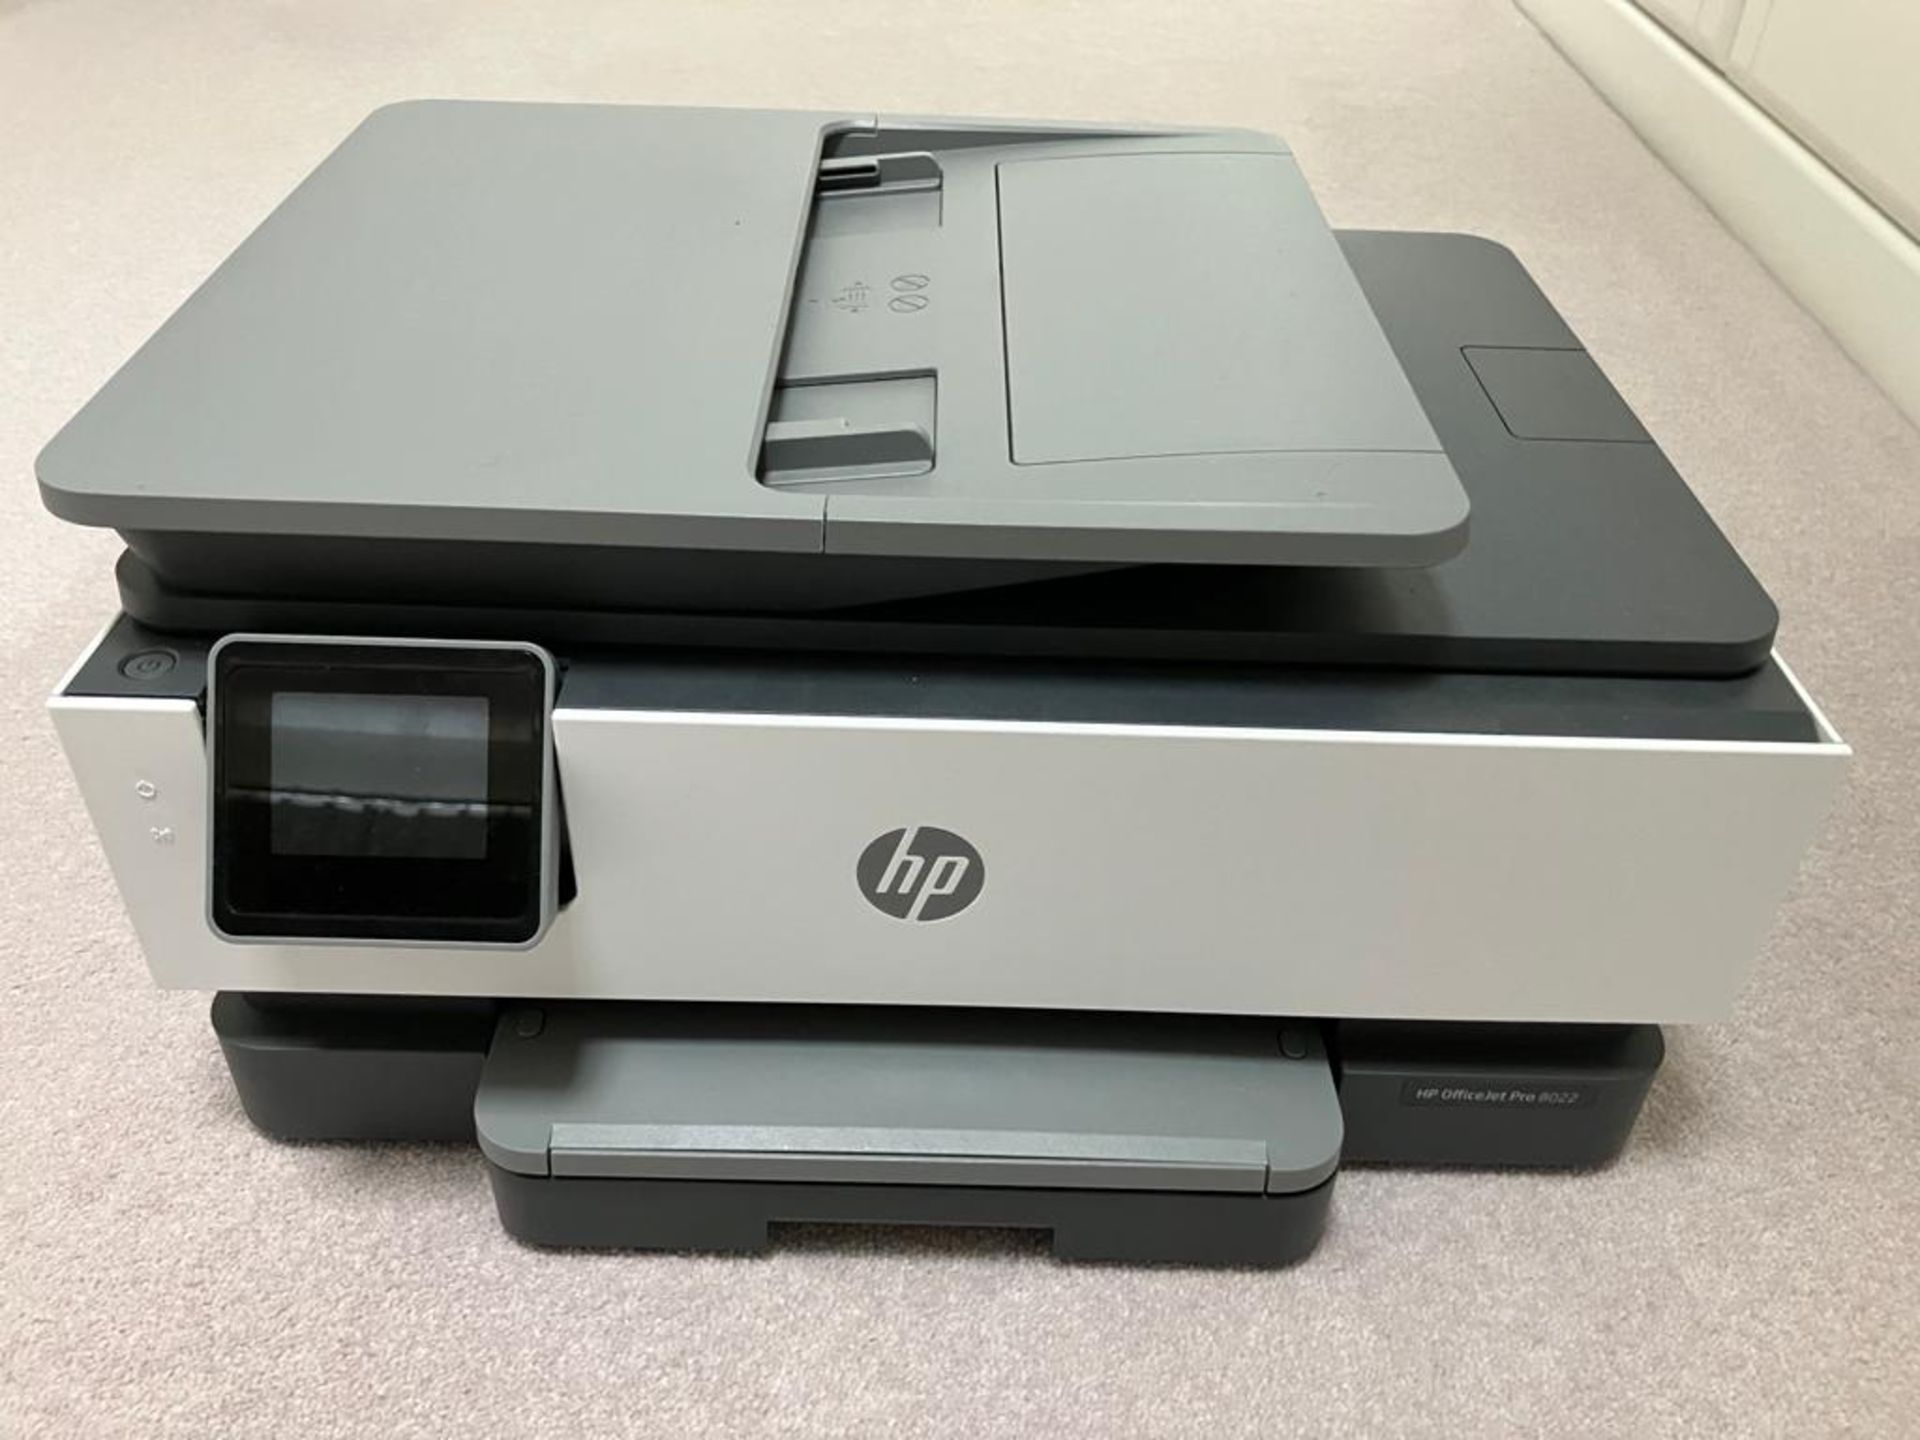 HP Office Jet Pro 8022 Printer/Scanner etc - NO VAT!